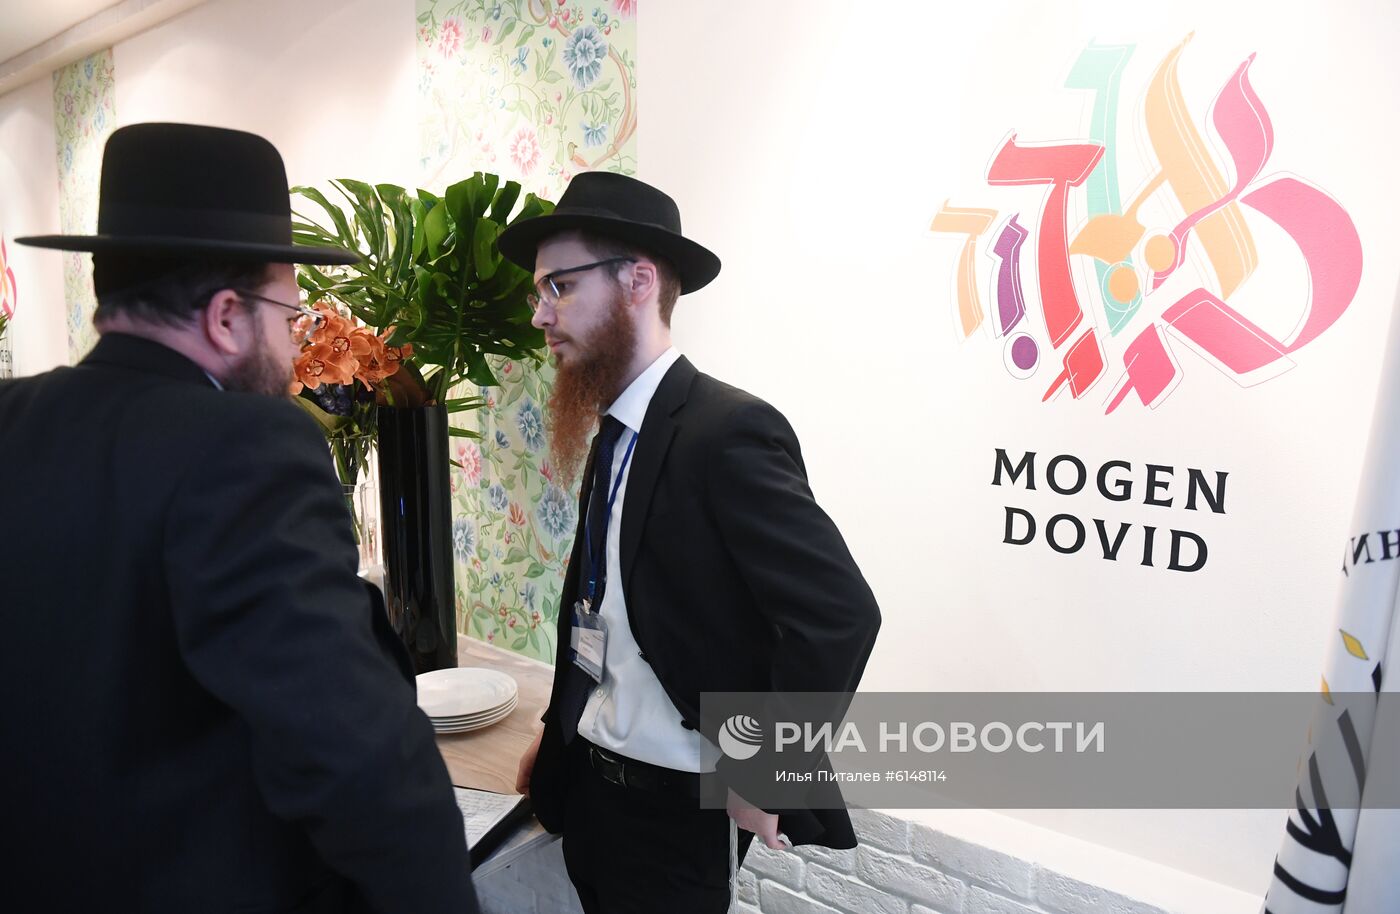 VII съезд Федерации еврейских общин России